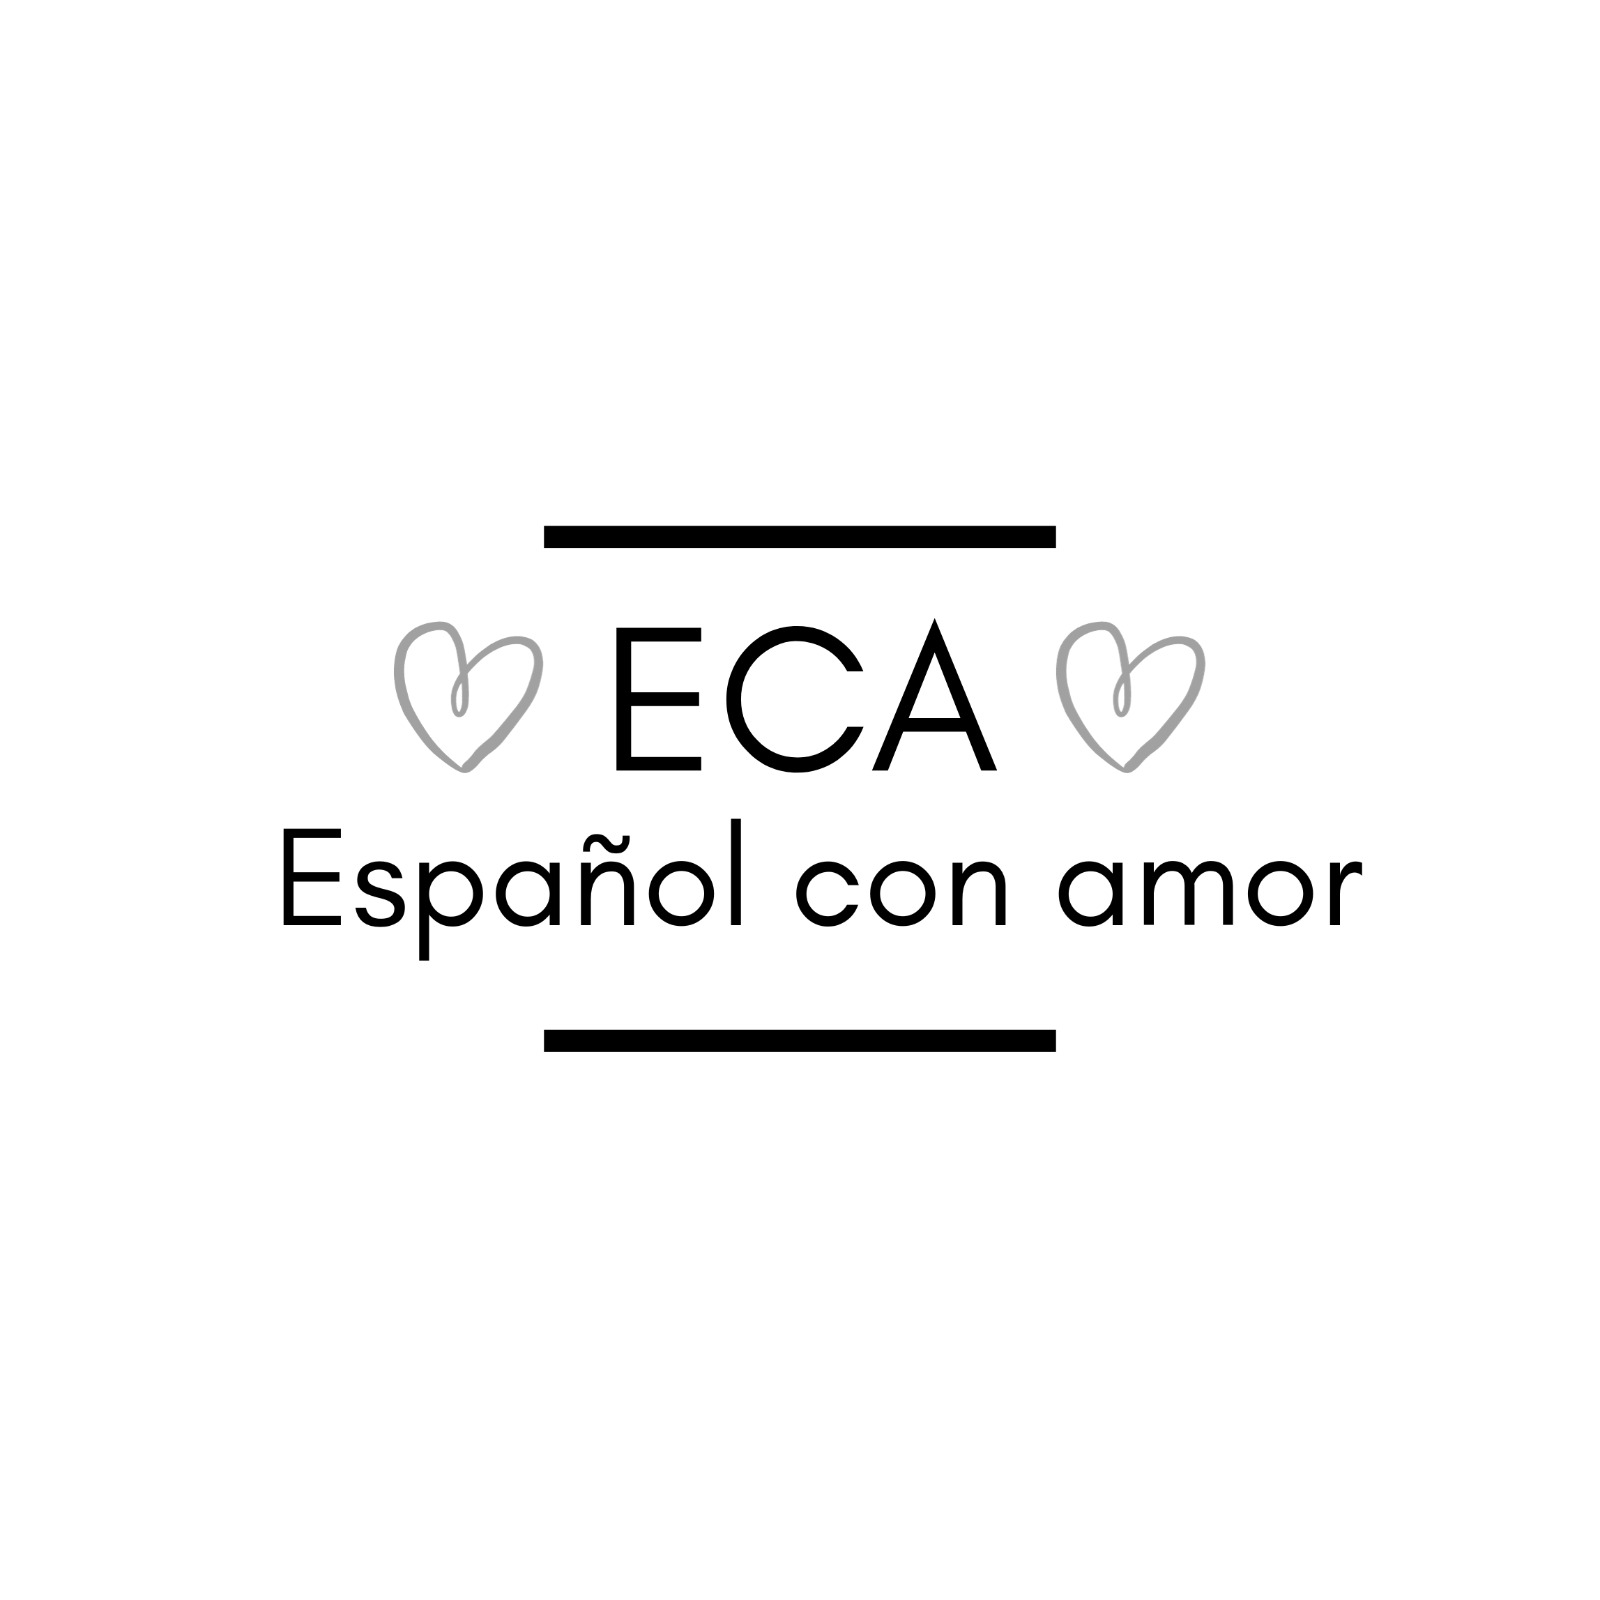 Español con Amor